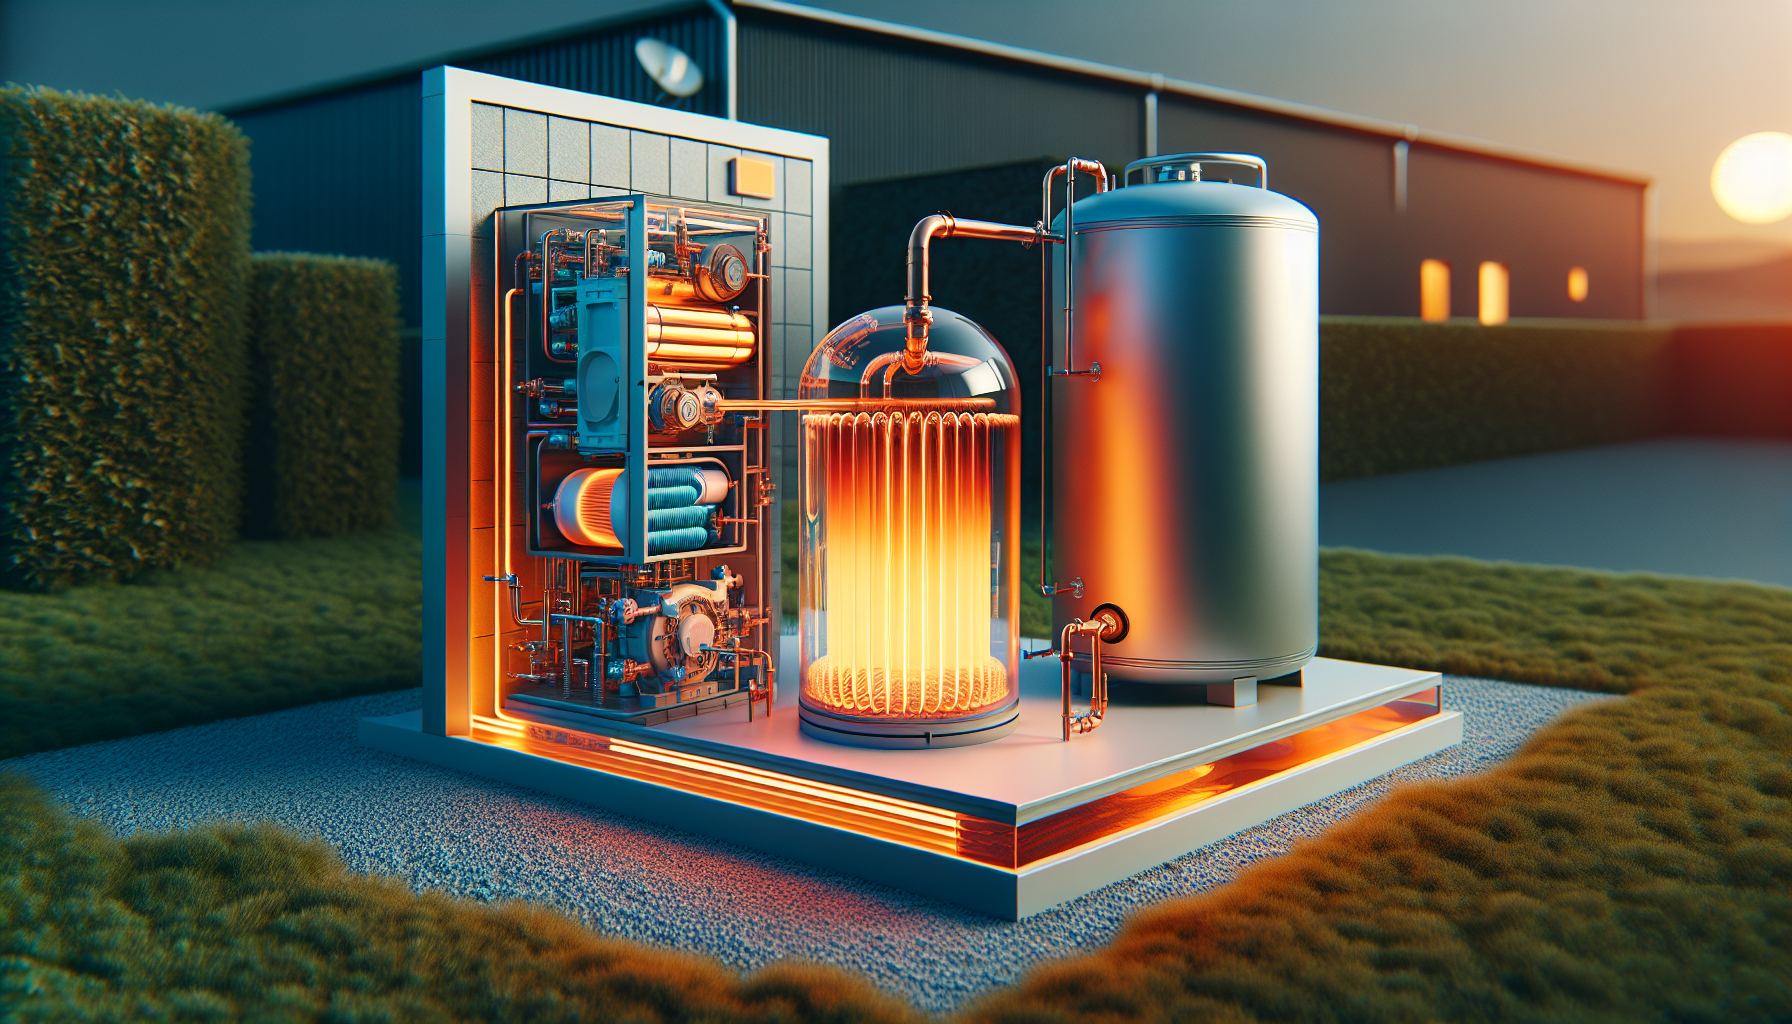 Illustration of heat pump hot water system